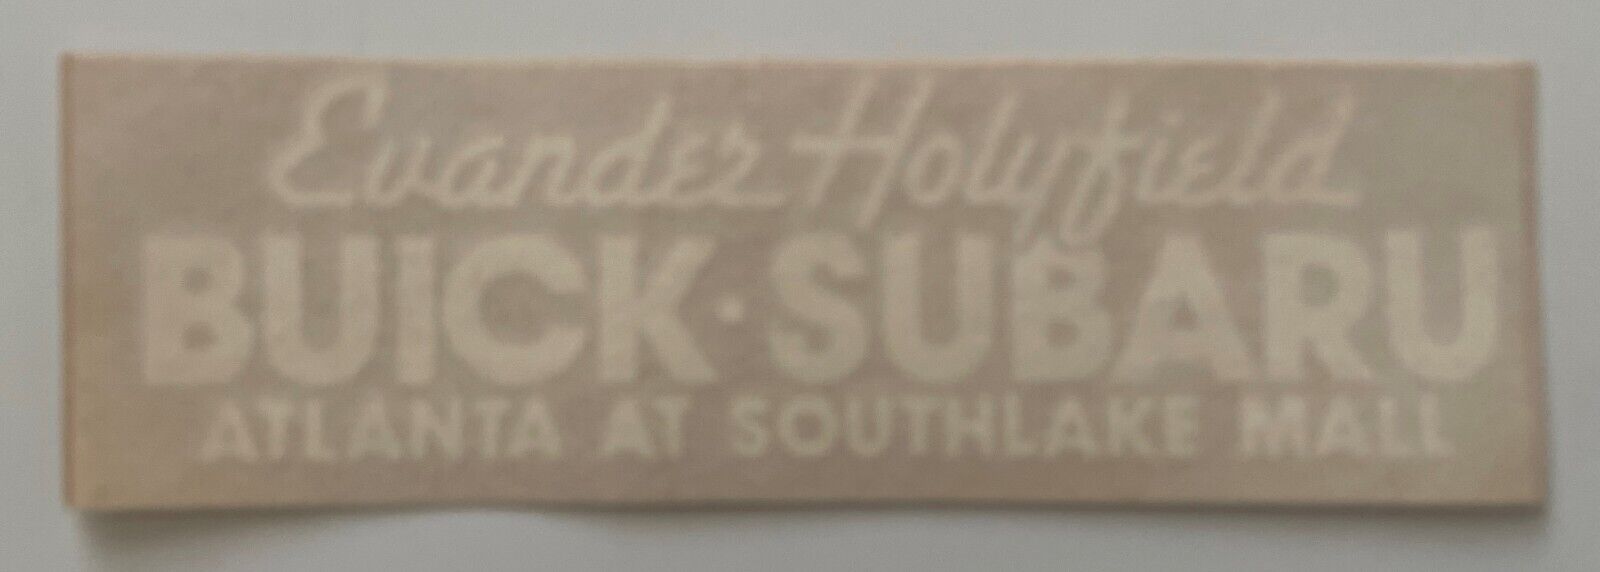 1990 EVANDER HOLYFIELD BUICK SUBARU Dealership Sticker ATLANTA GA SOUTHLAKE MALL